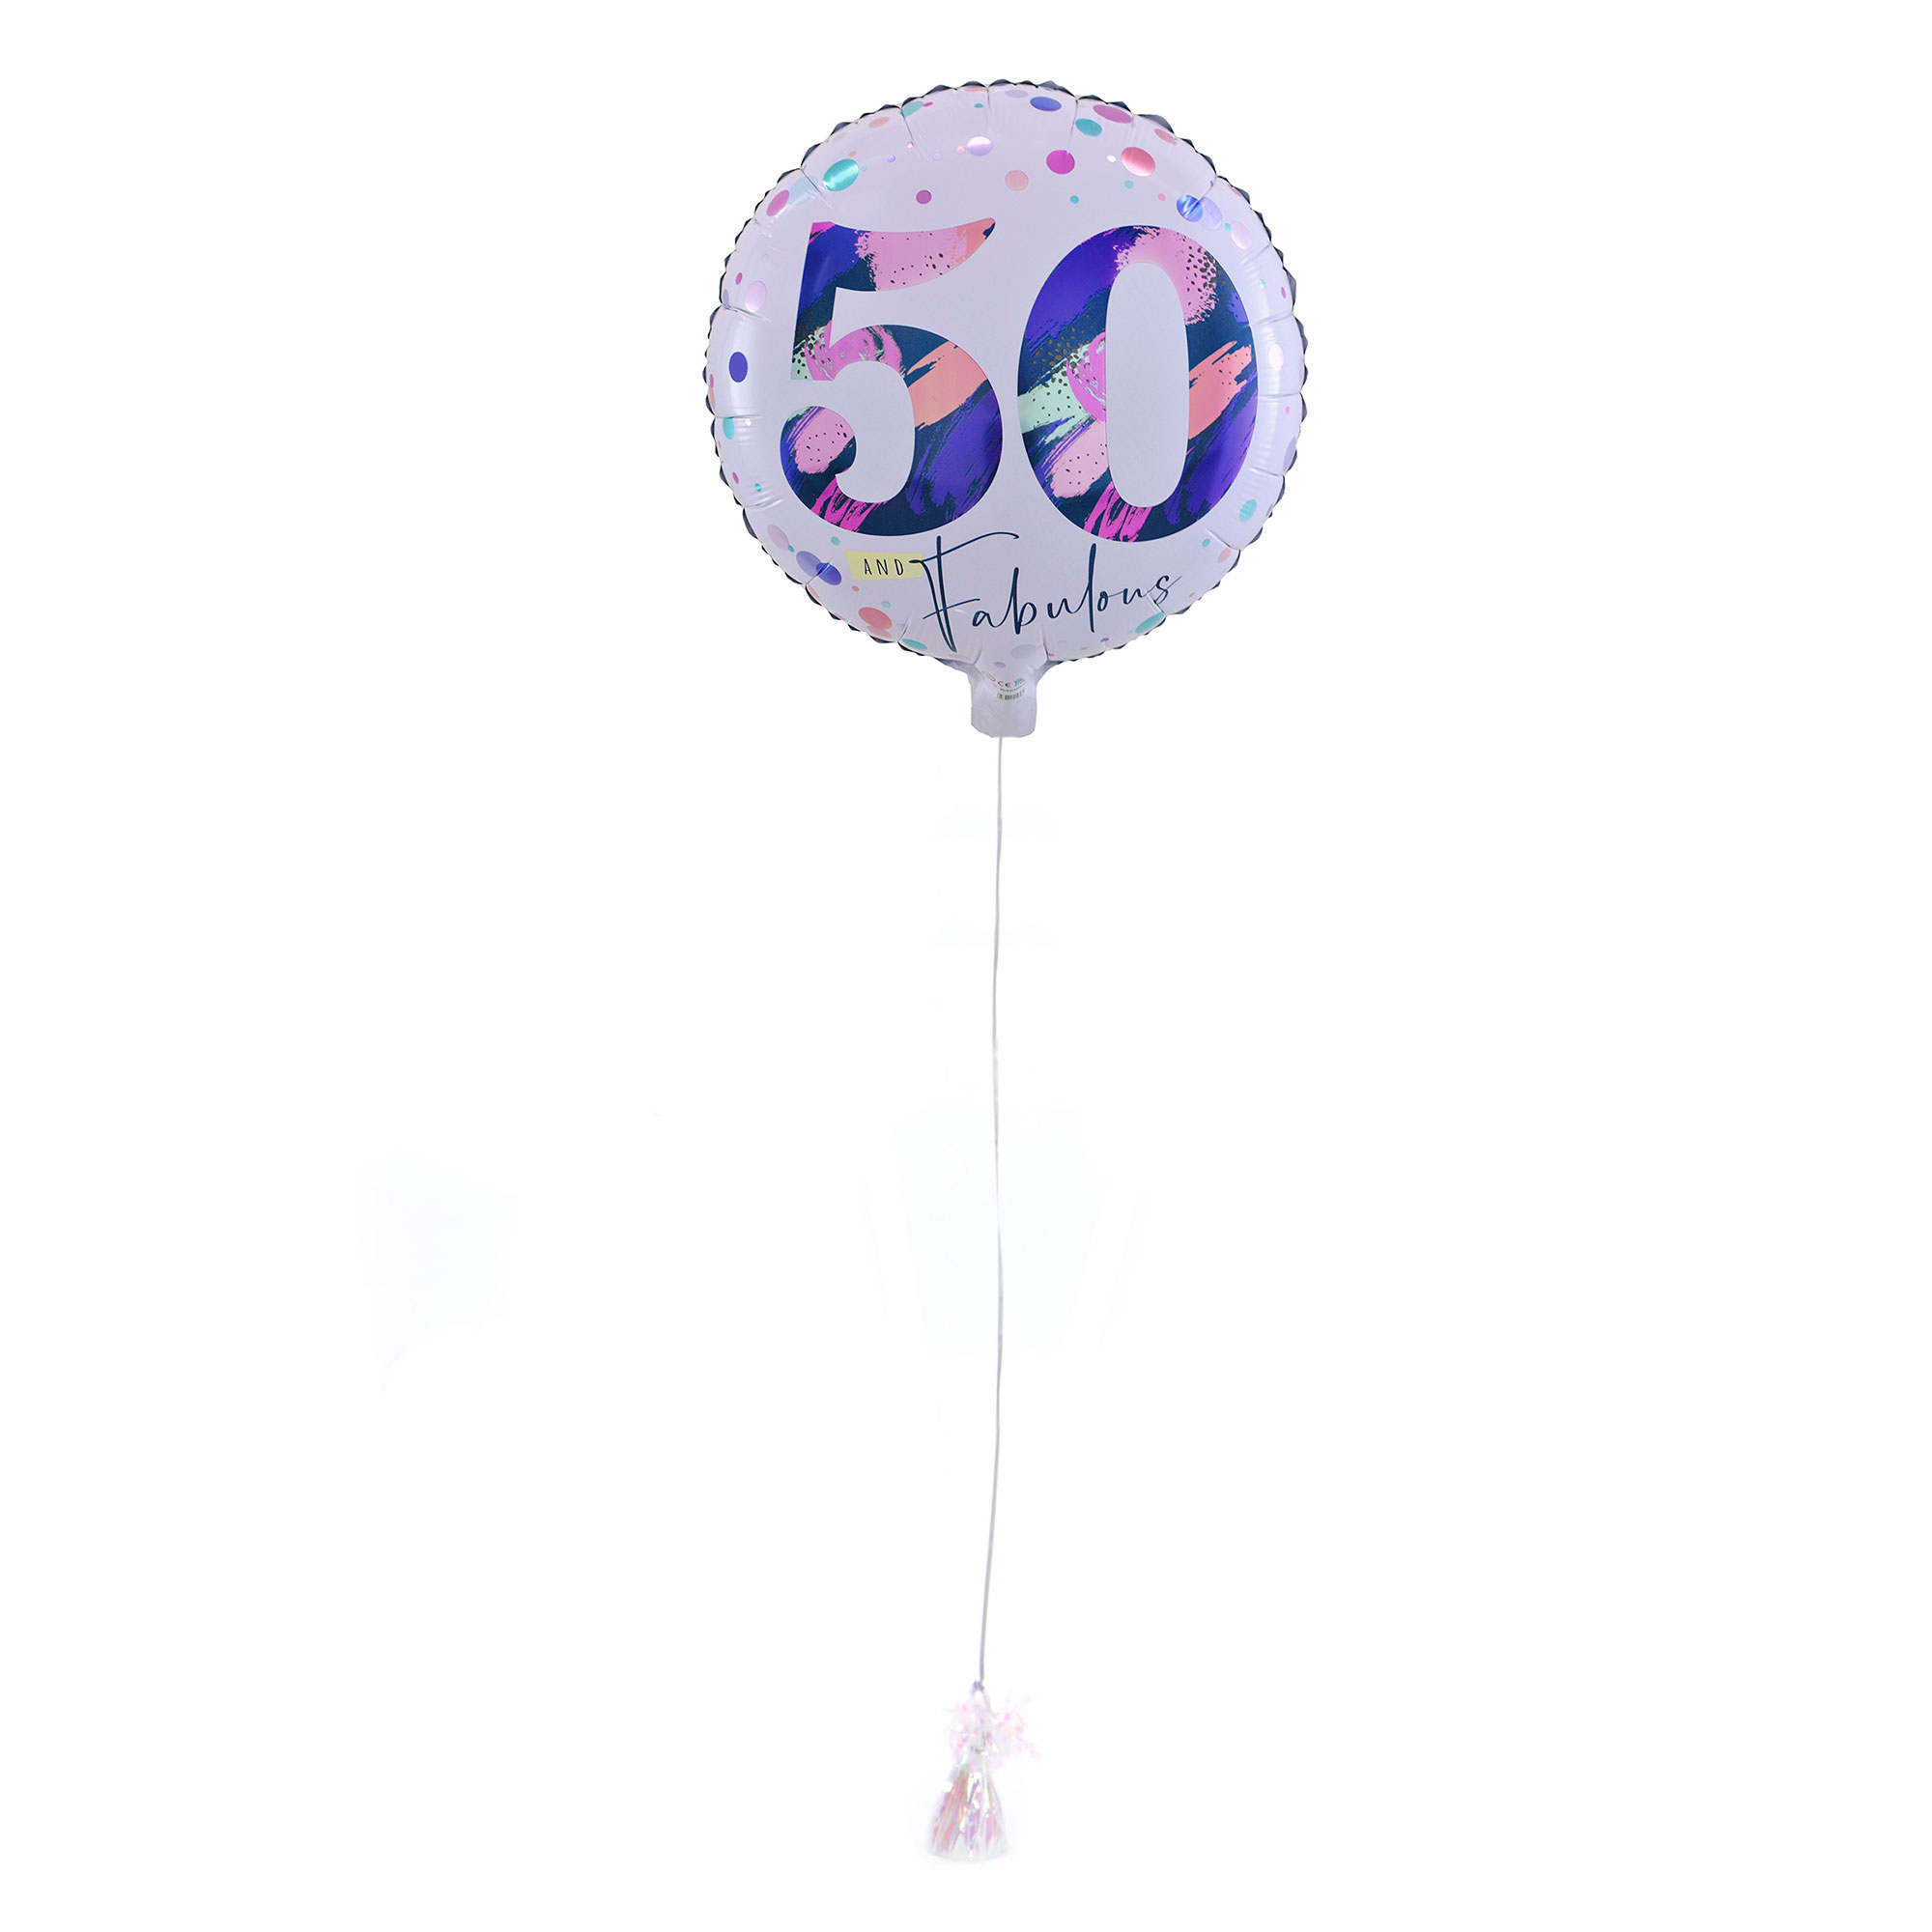 Fabulous 50th Birthday Balloon & Lindt Chocolates - FREE GIFT CARD!